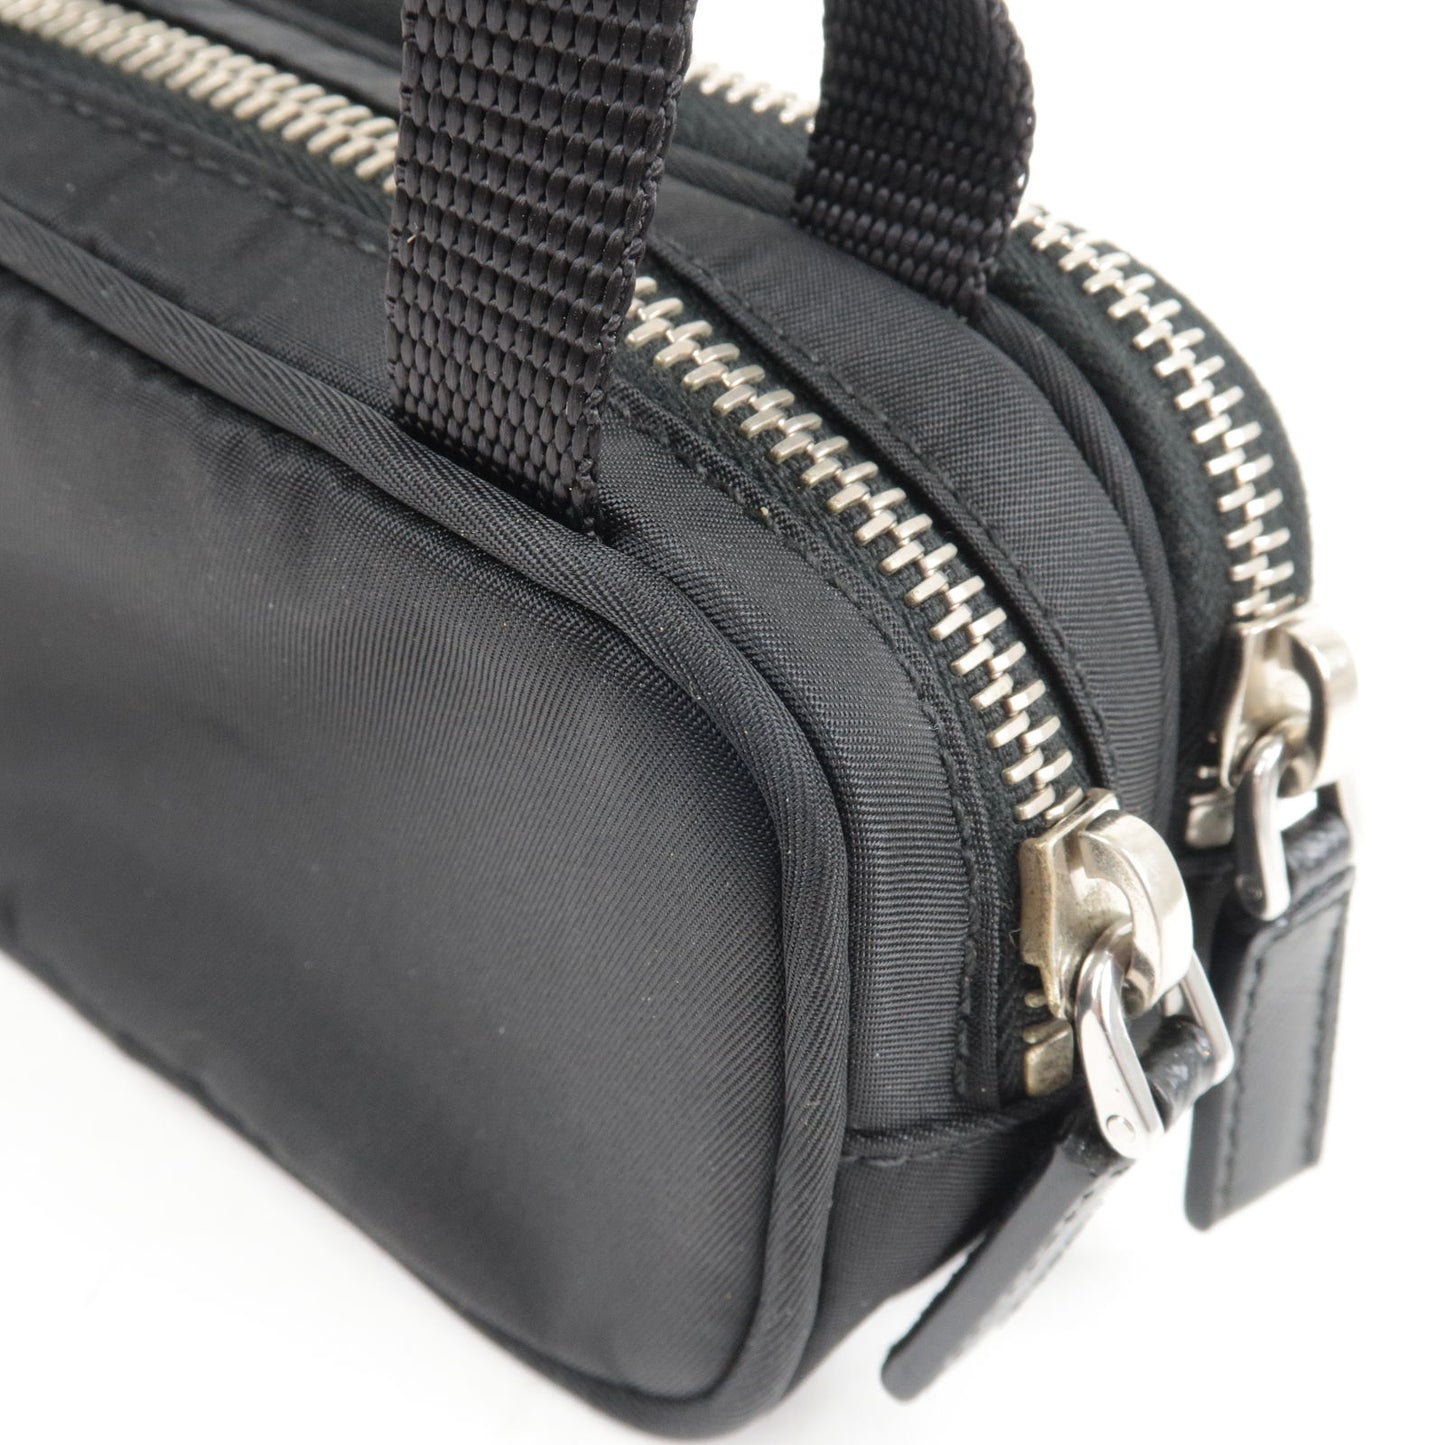 PRADA Logo Nylon Leather Pouch Mini Bag Black 1N1346